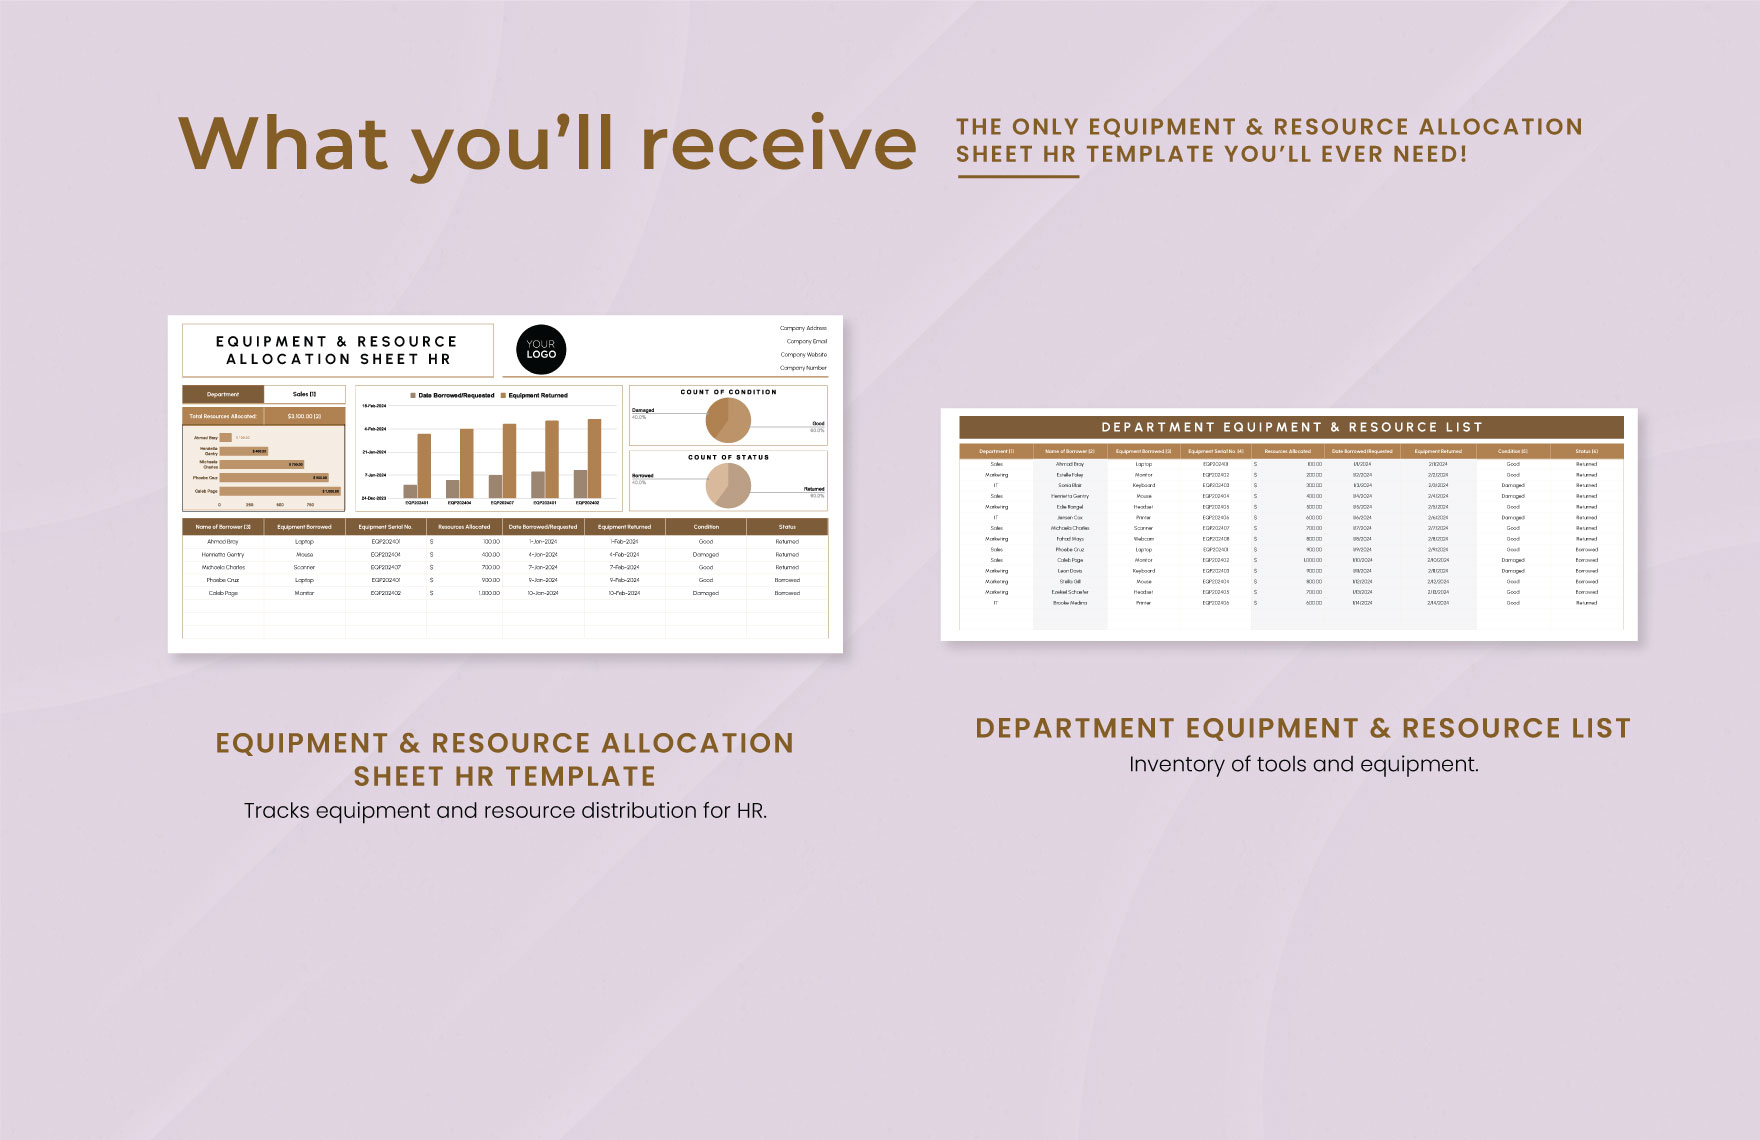 Equipment & Resource Allocation Sheet HR Template